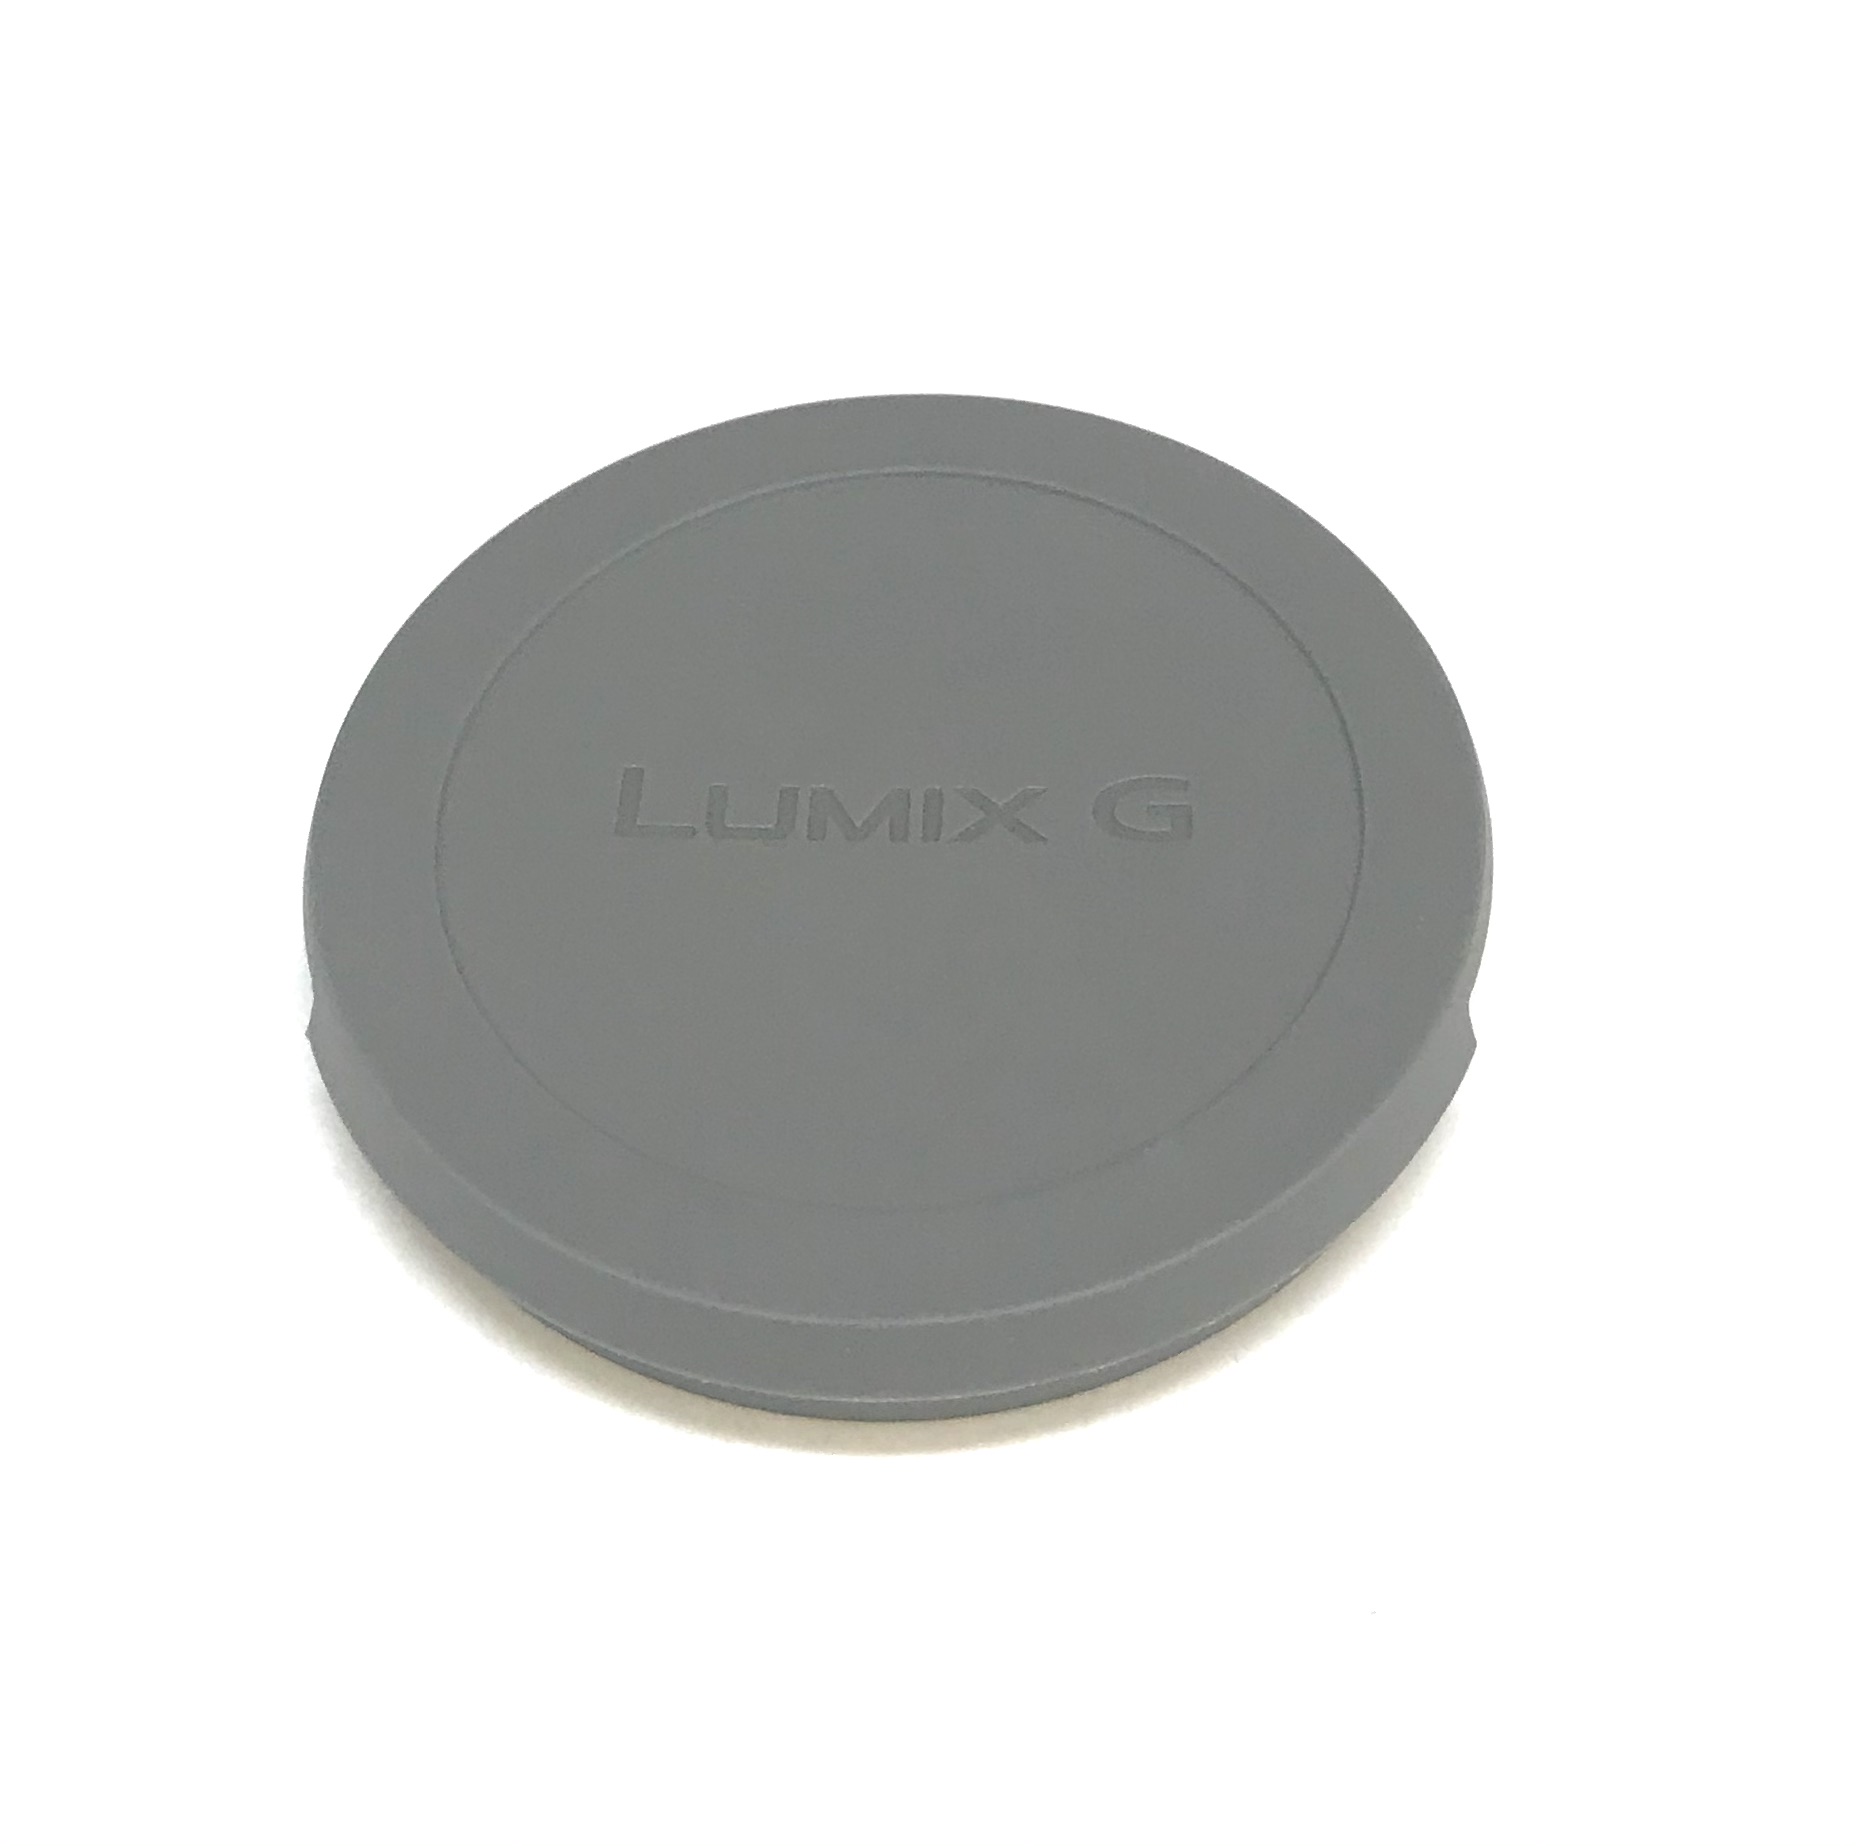 PANSONIC OEM Panasonic Silver Lens Hood Cap Shipped With HX015, H-X015, HX015S, H-X015S